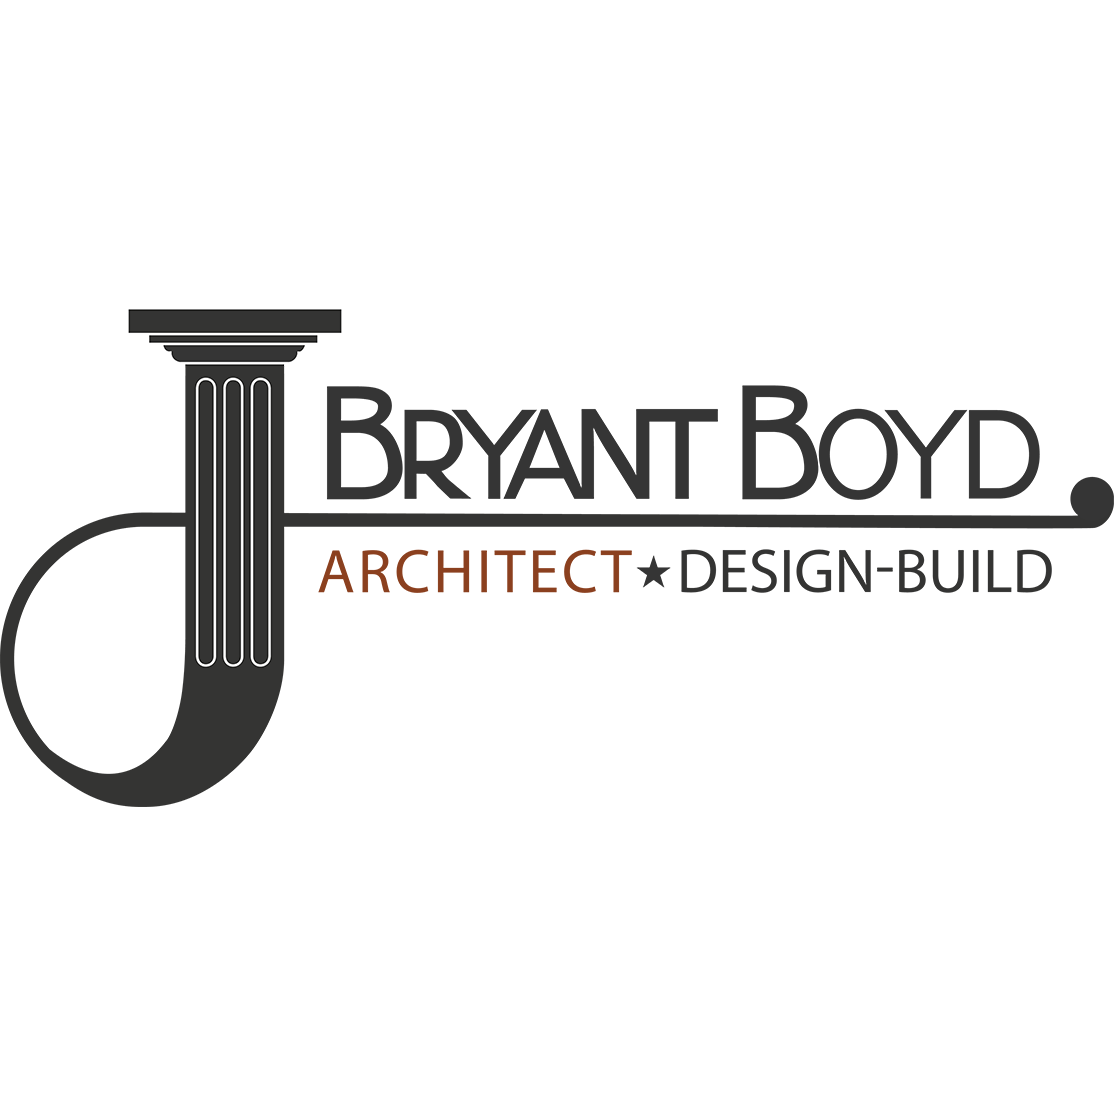 J Bryant Boyd Architect Design-Build Photo